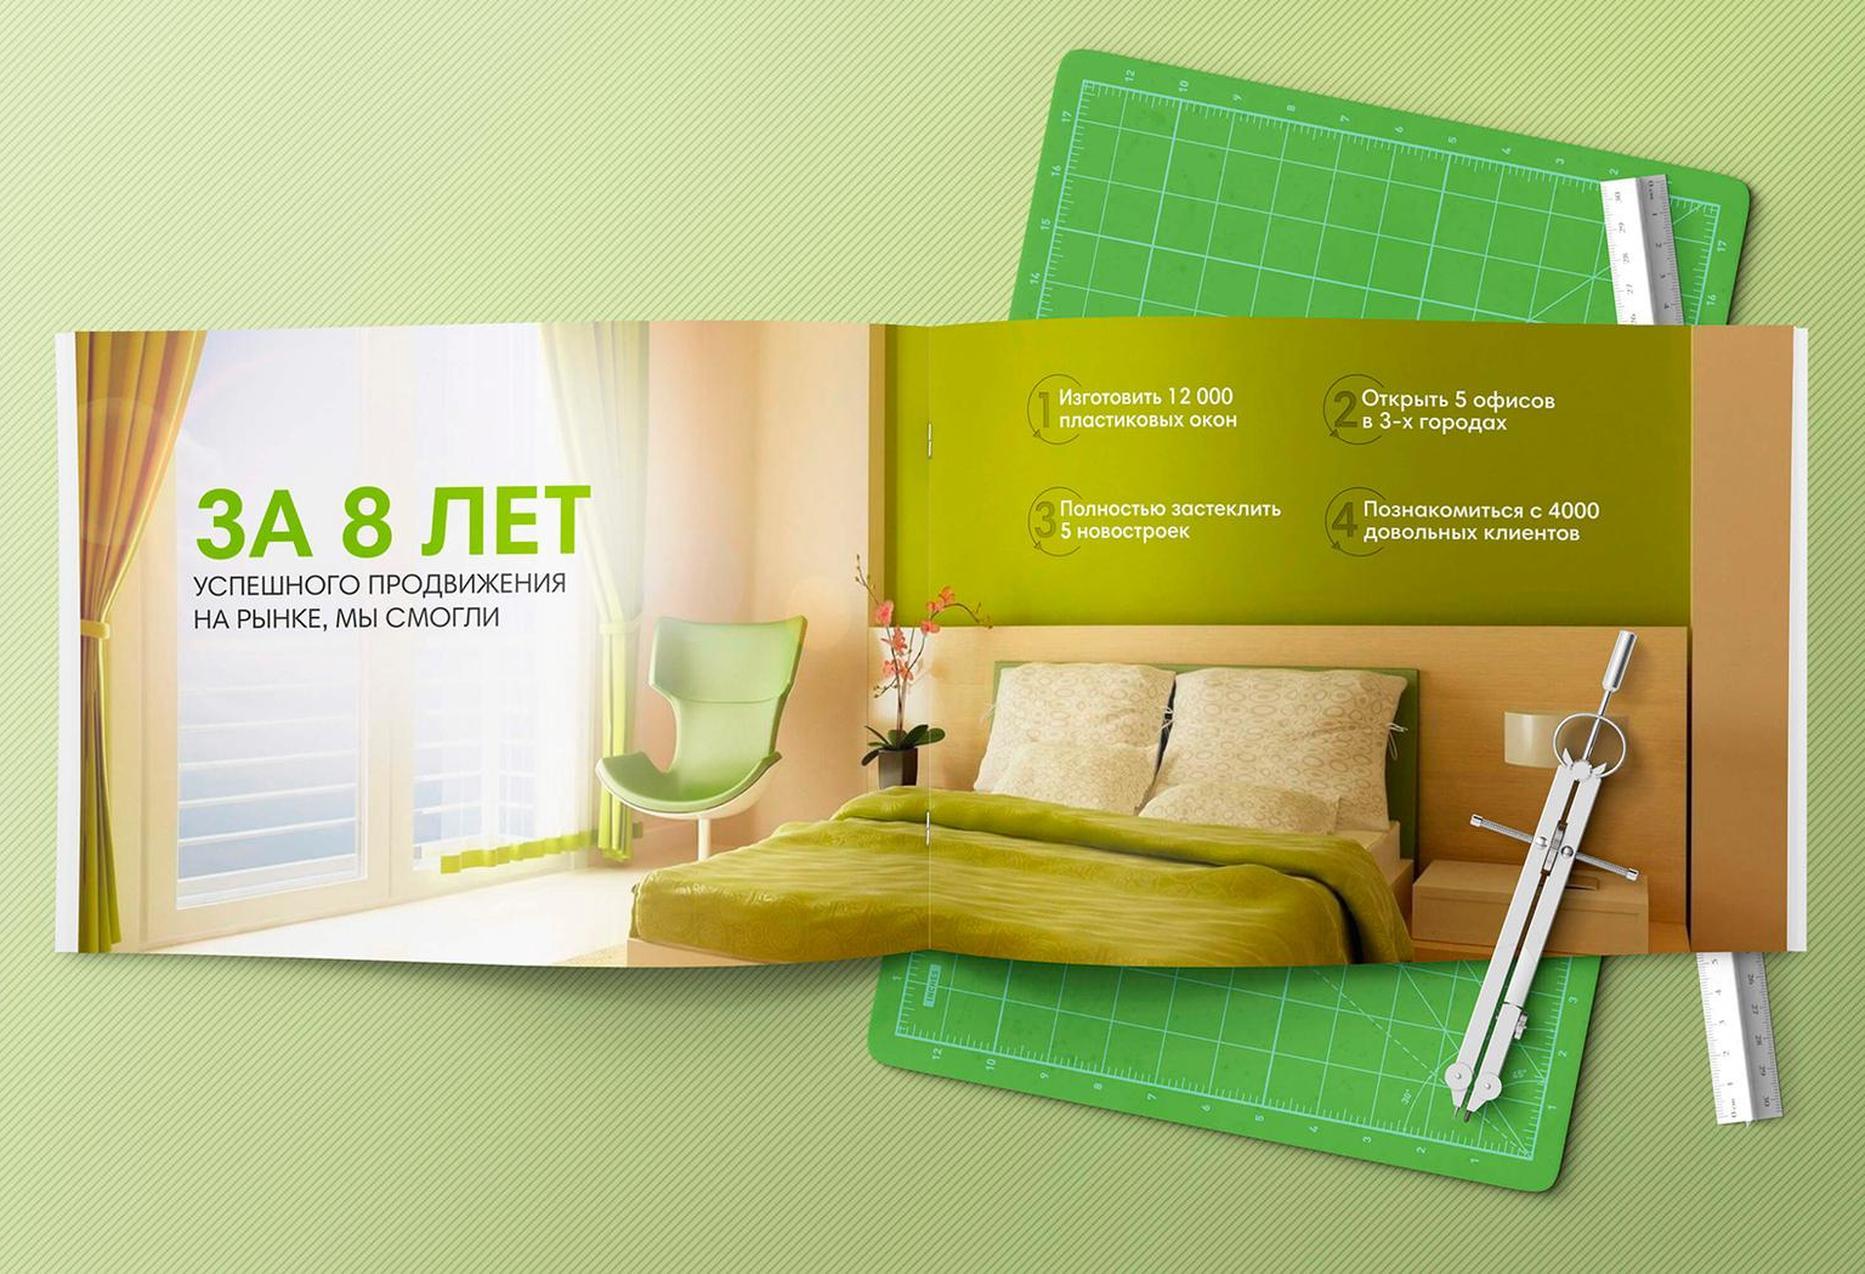 Case: marketing kit for the company Its Windows — Rubarb - Image - 4